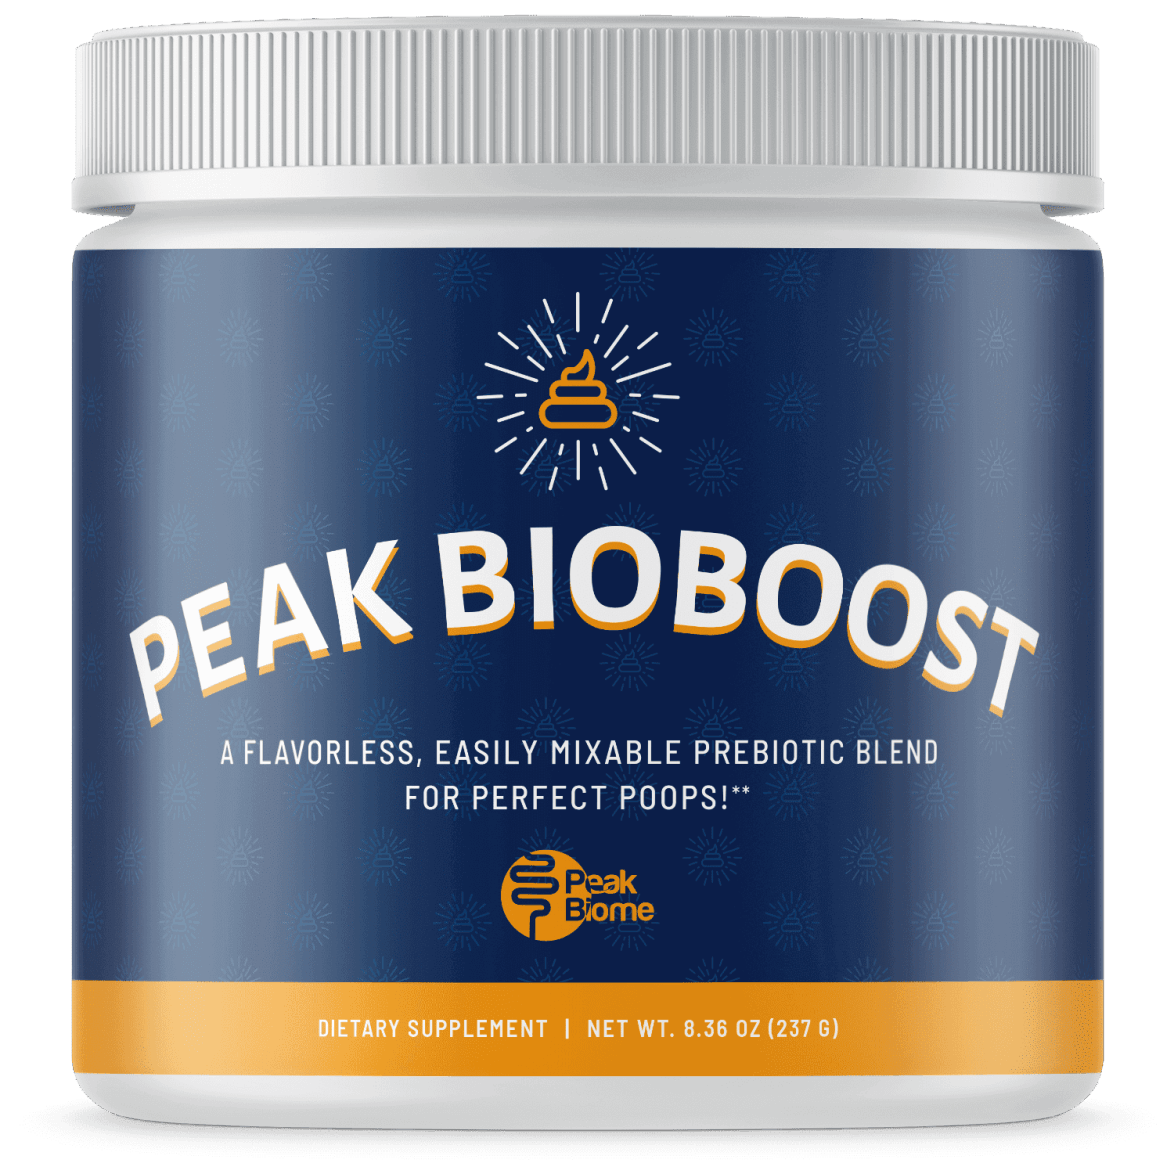 Peak-bio-boost